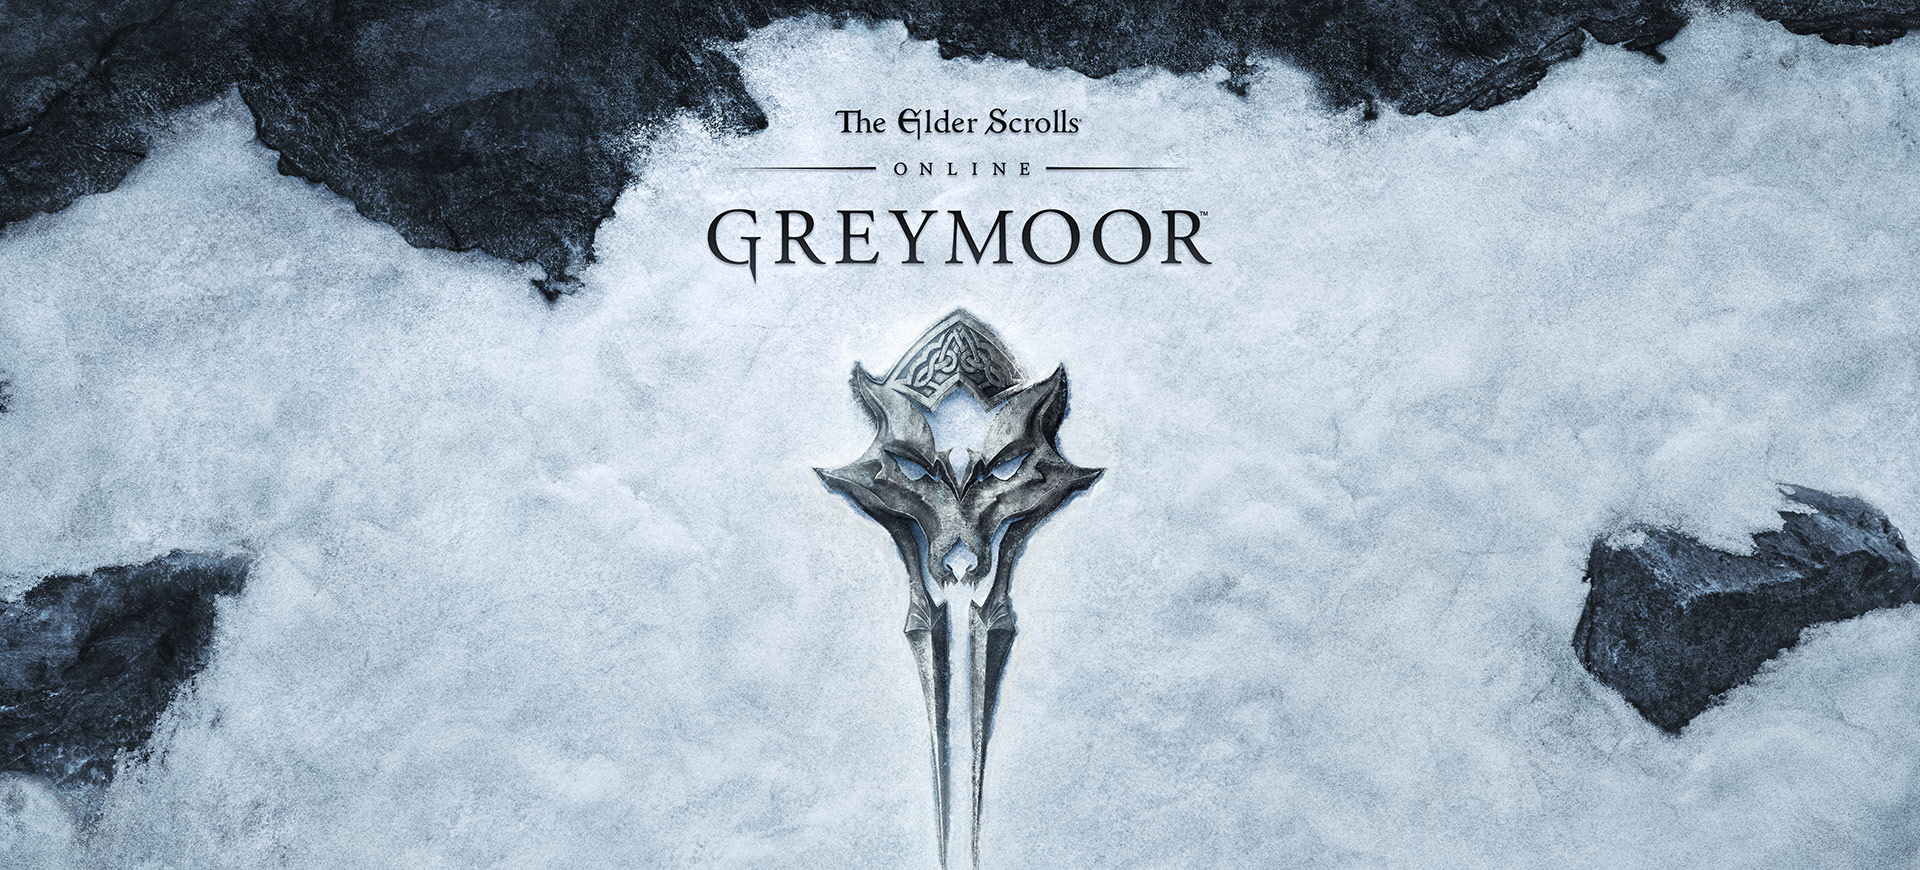 The Elder Scrolls Online Greymoor 各版本和預購獎勵